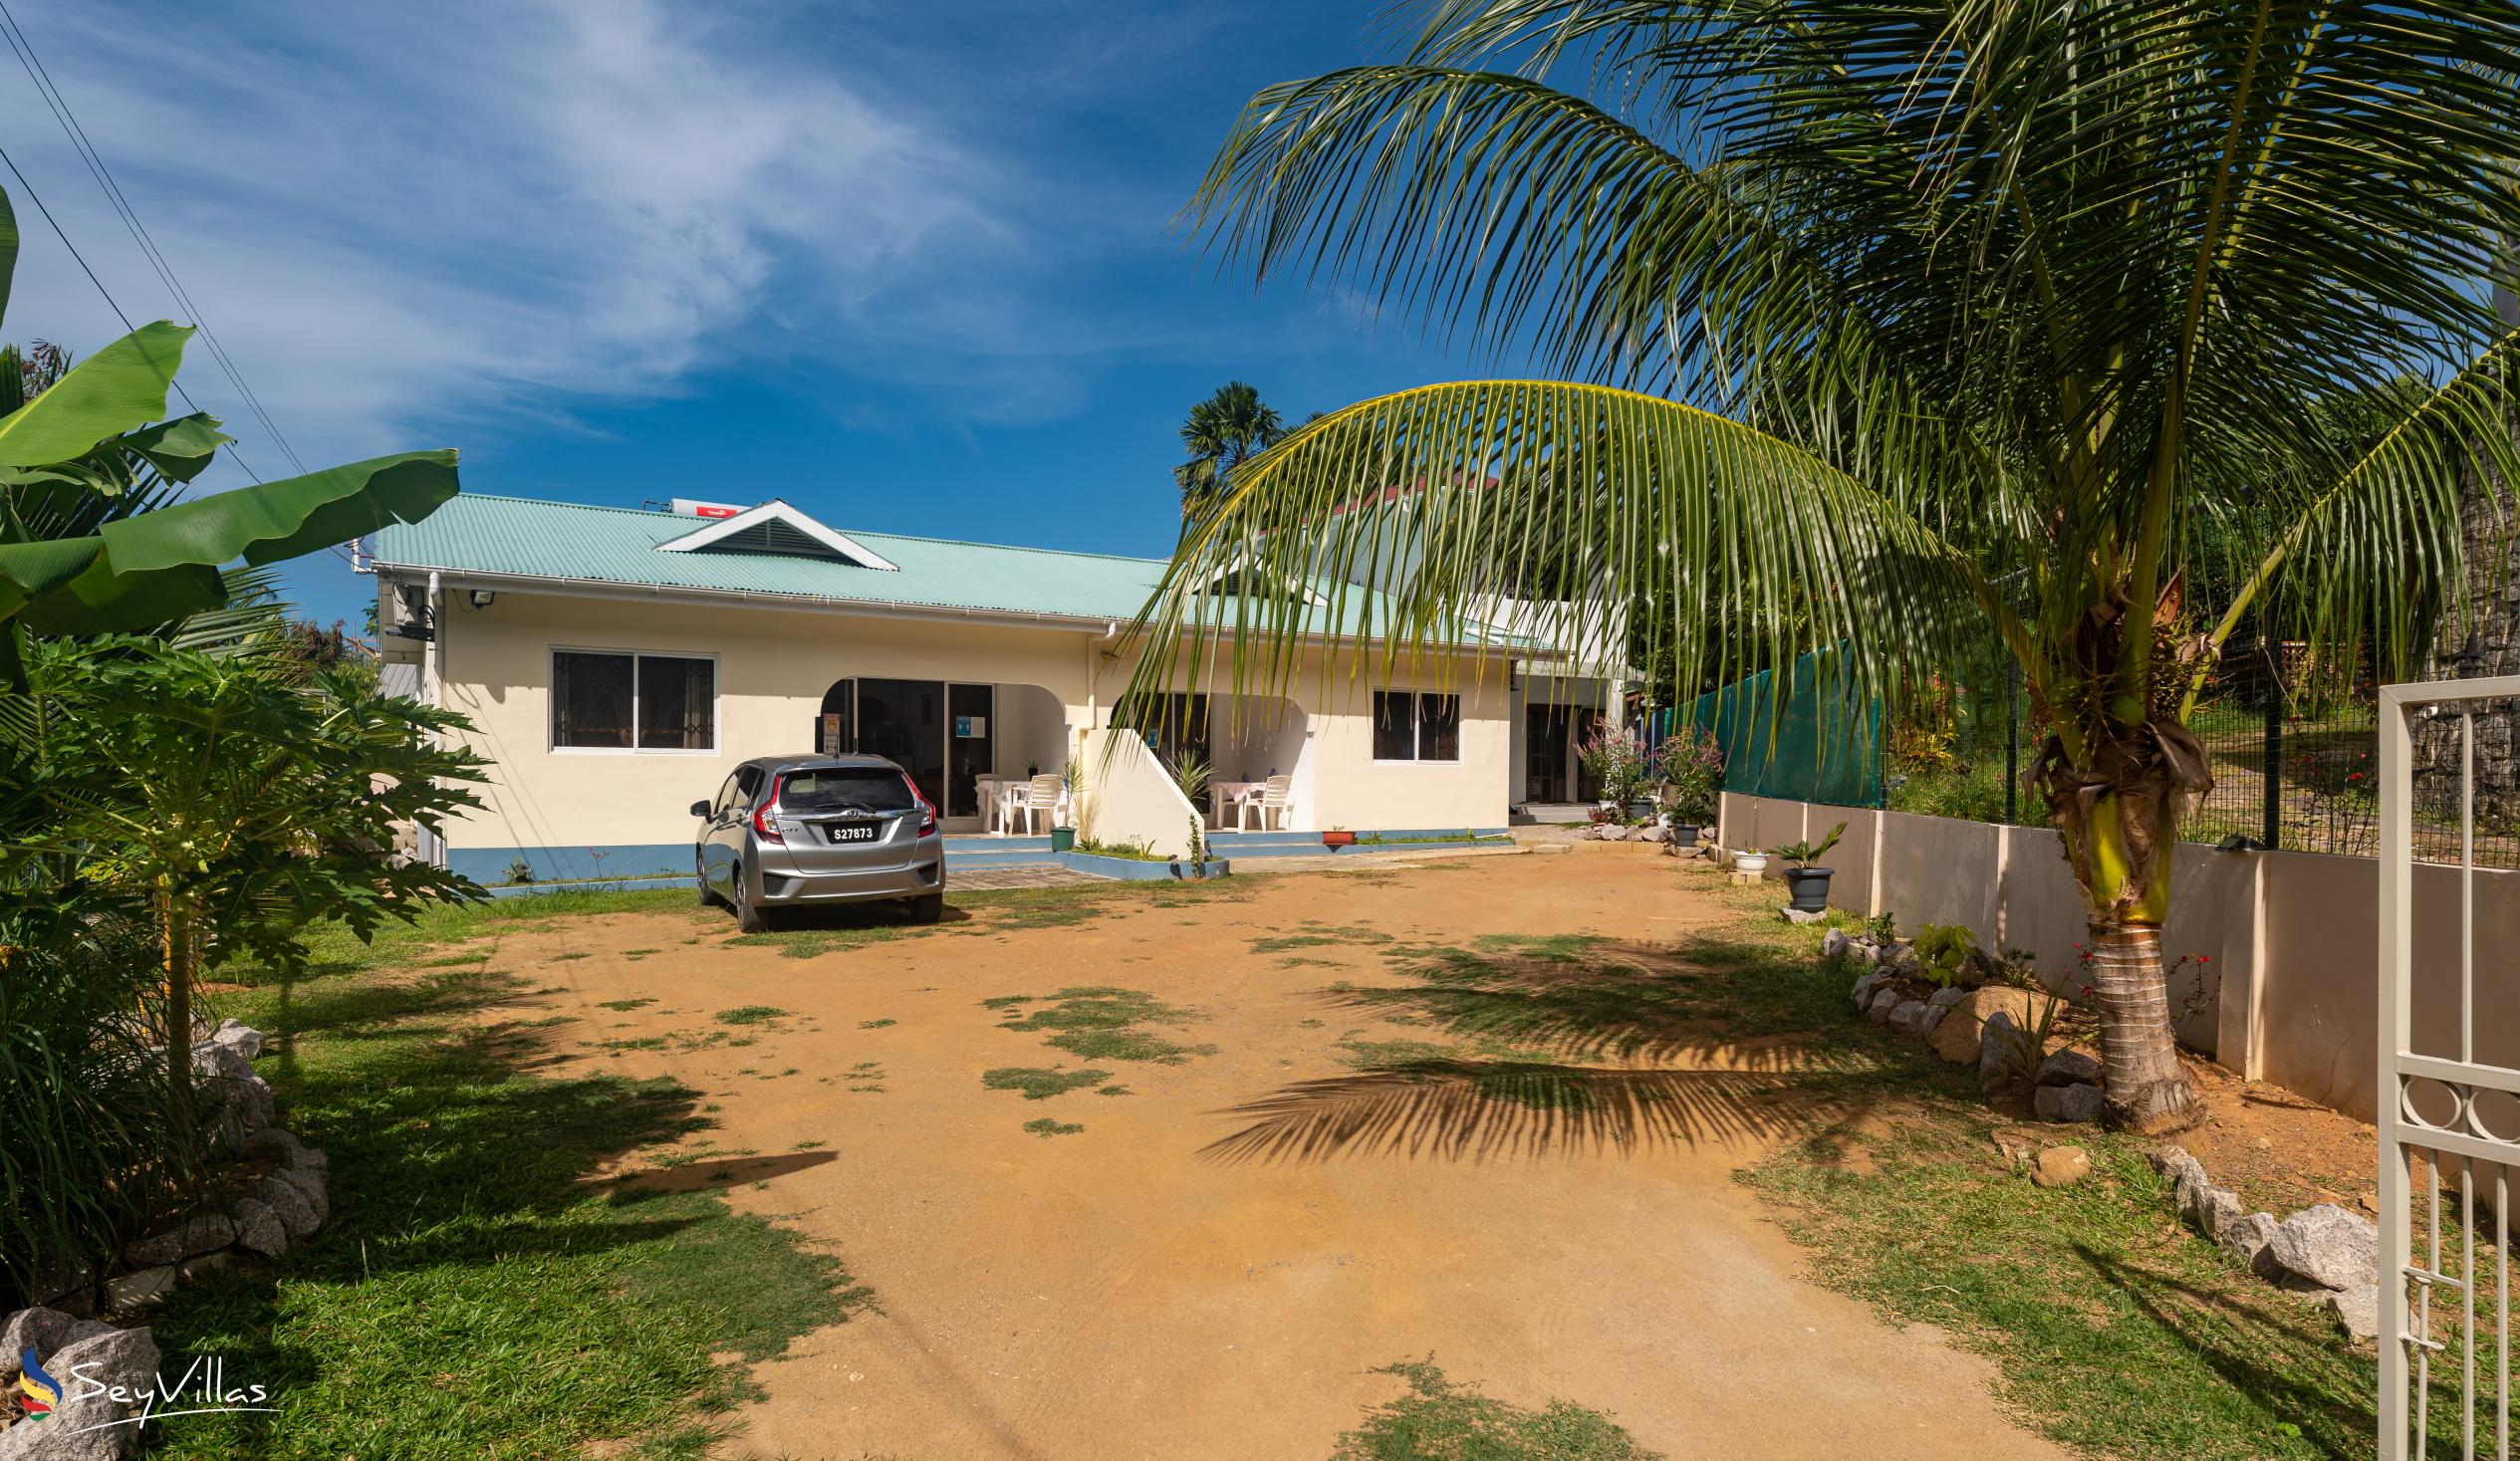 Foto 3: Farida Apartments - Aussenbereich - Mahé (Seychellen)